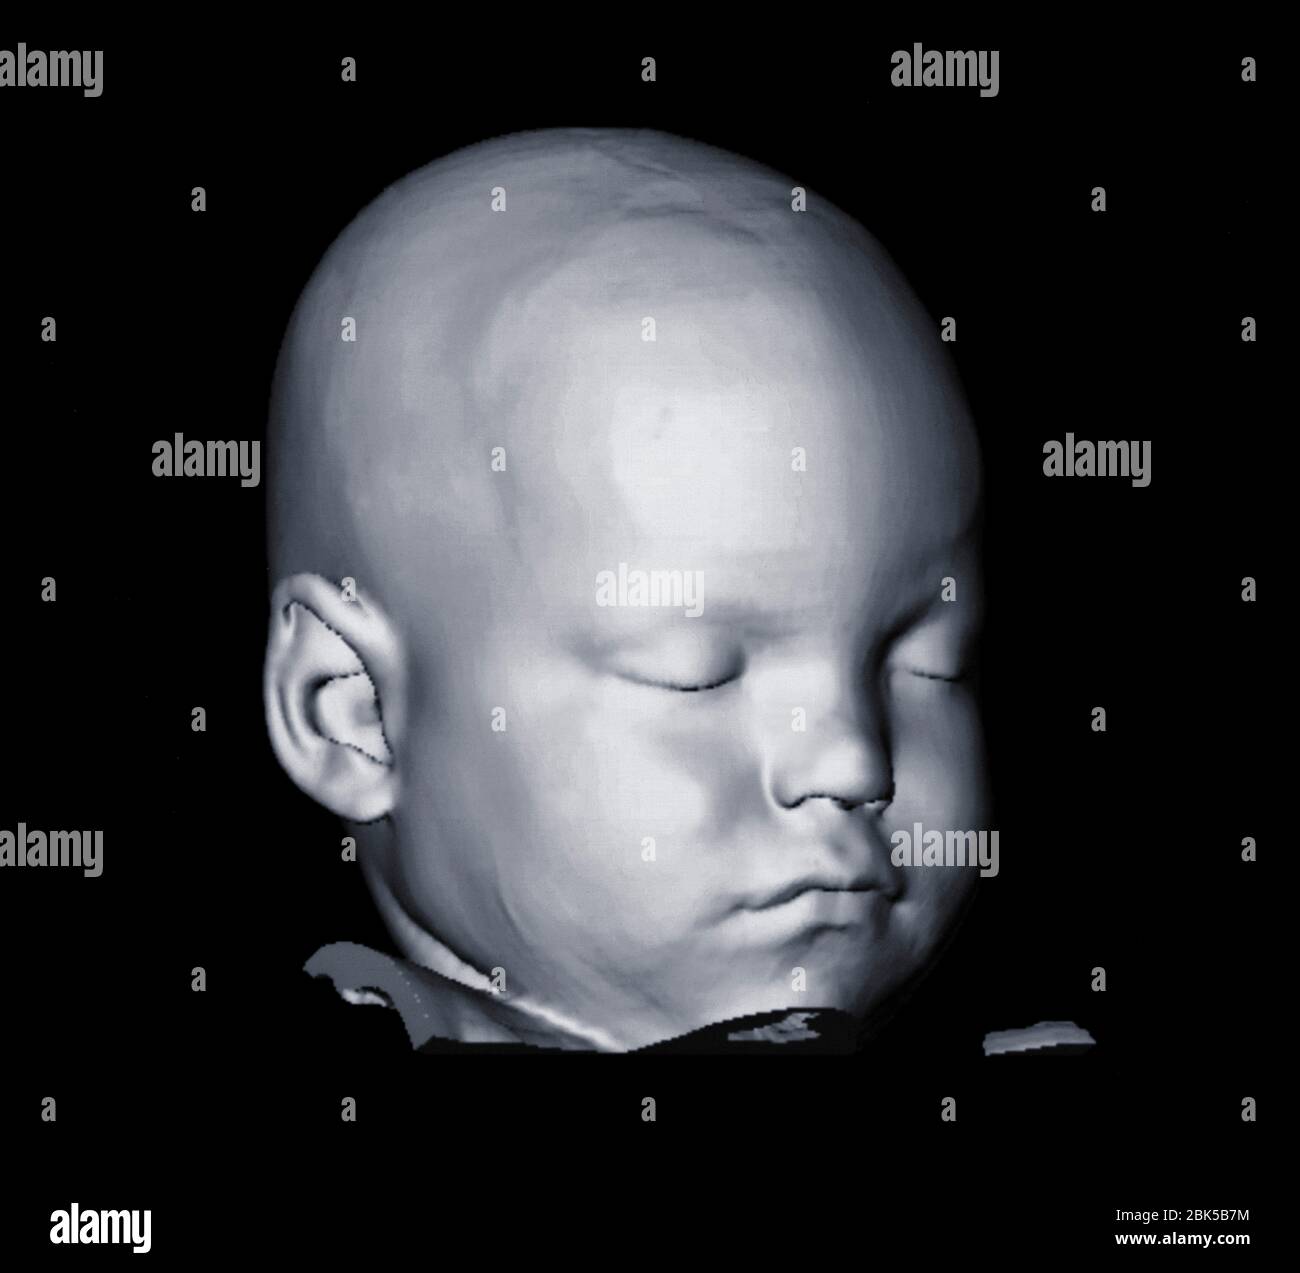 Bild des Kopfes des Babys, Computertomographie (CT) Scan. Stockfoto